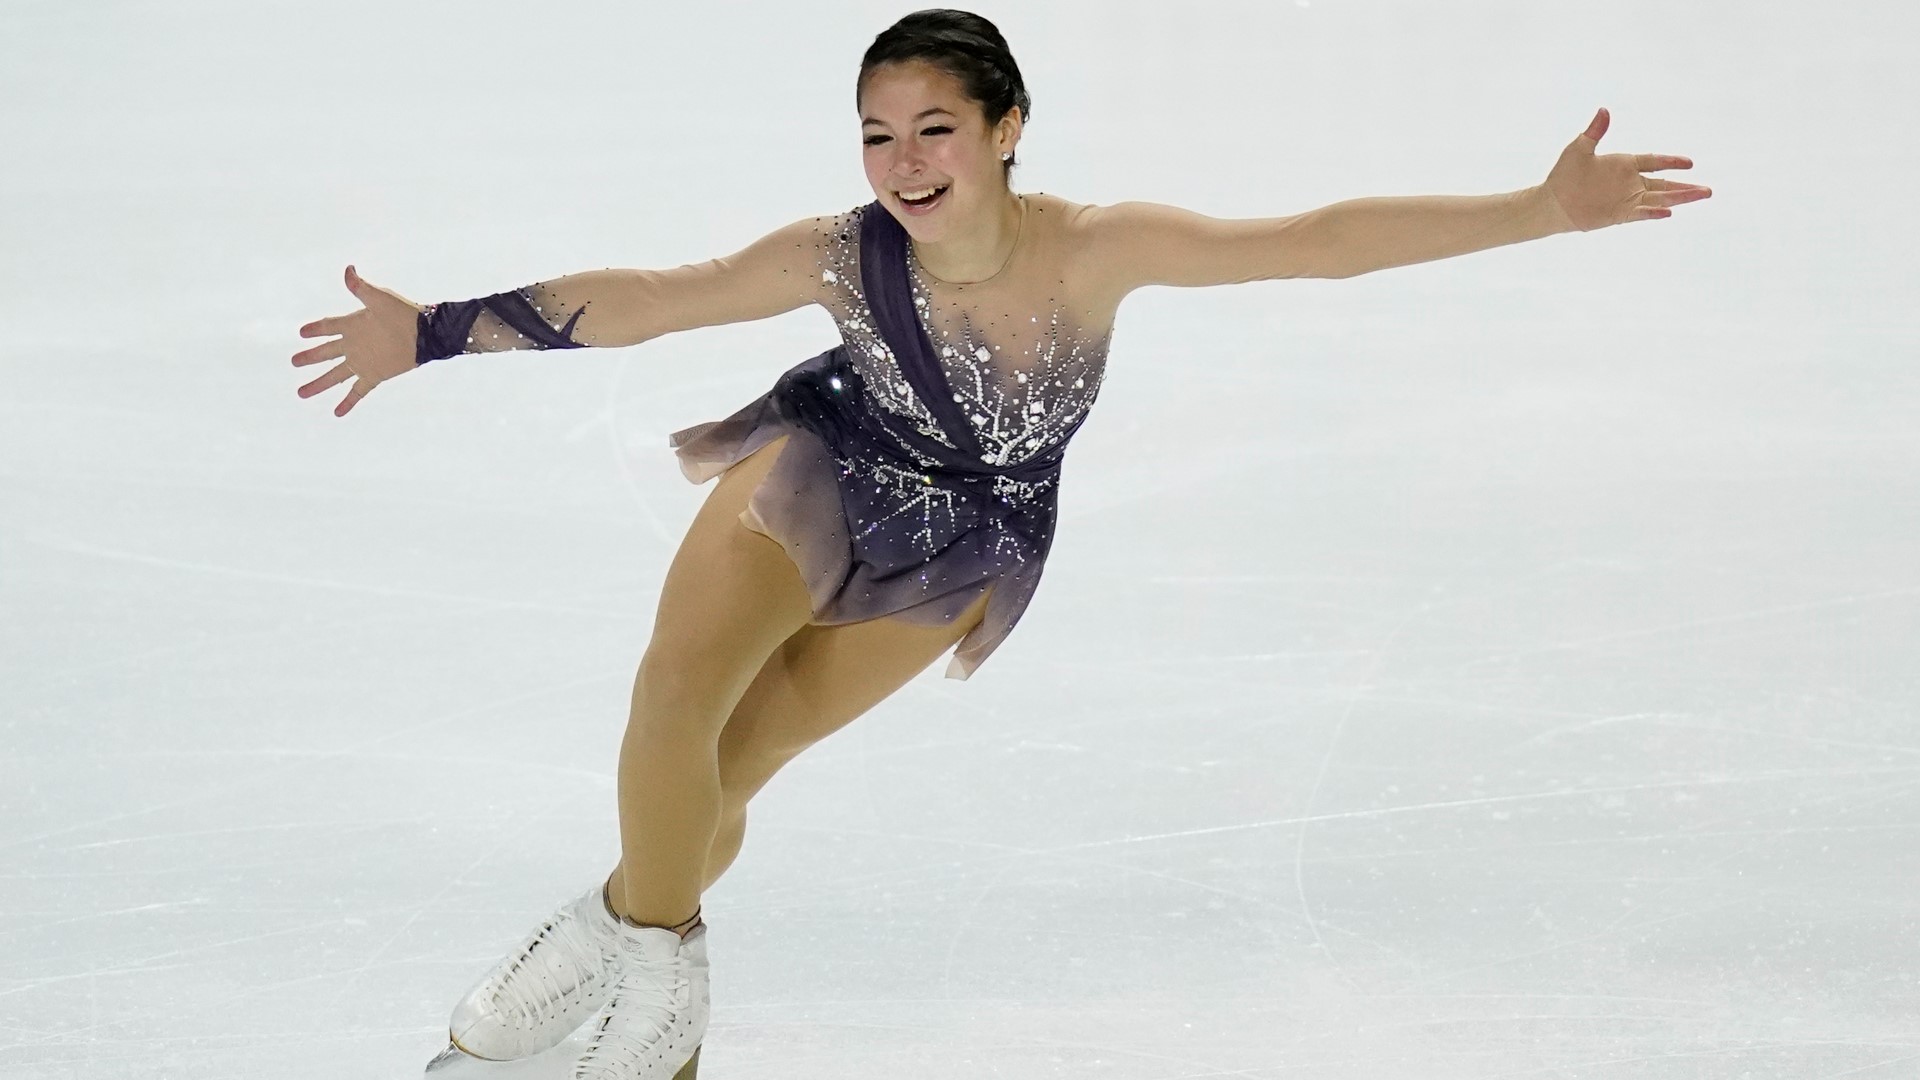 Kamila Valieva, under microscrope, goes for figure skating gold cbs19